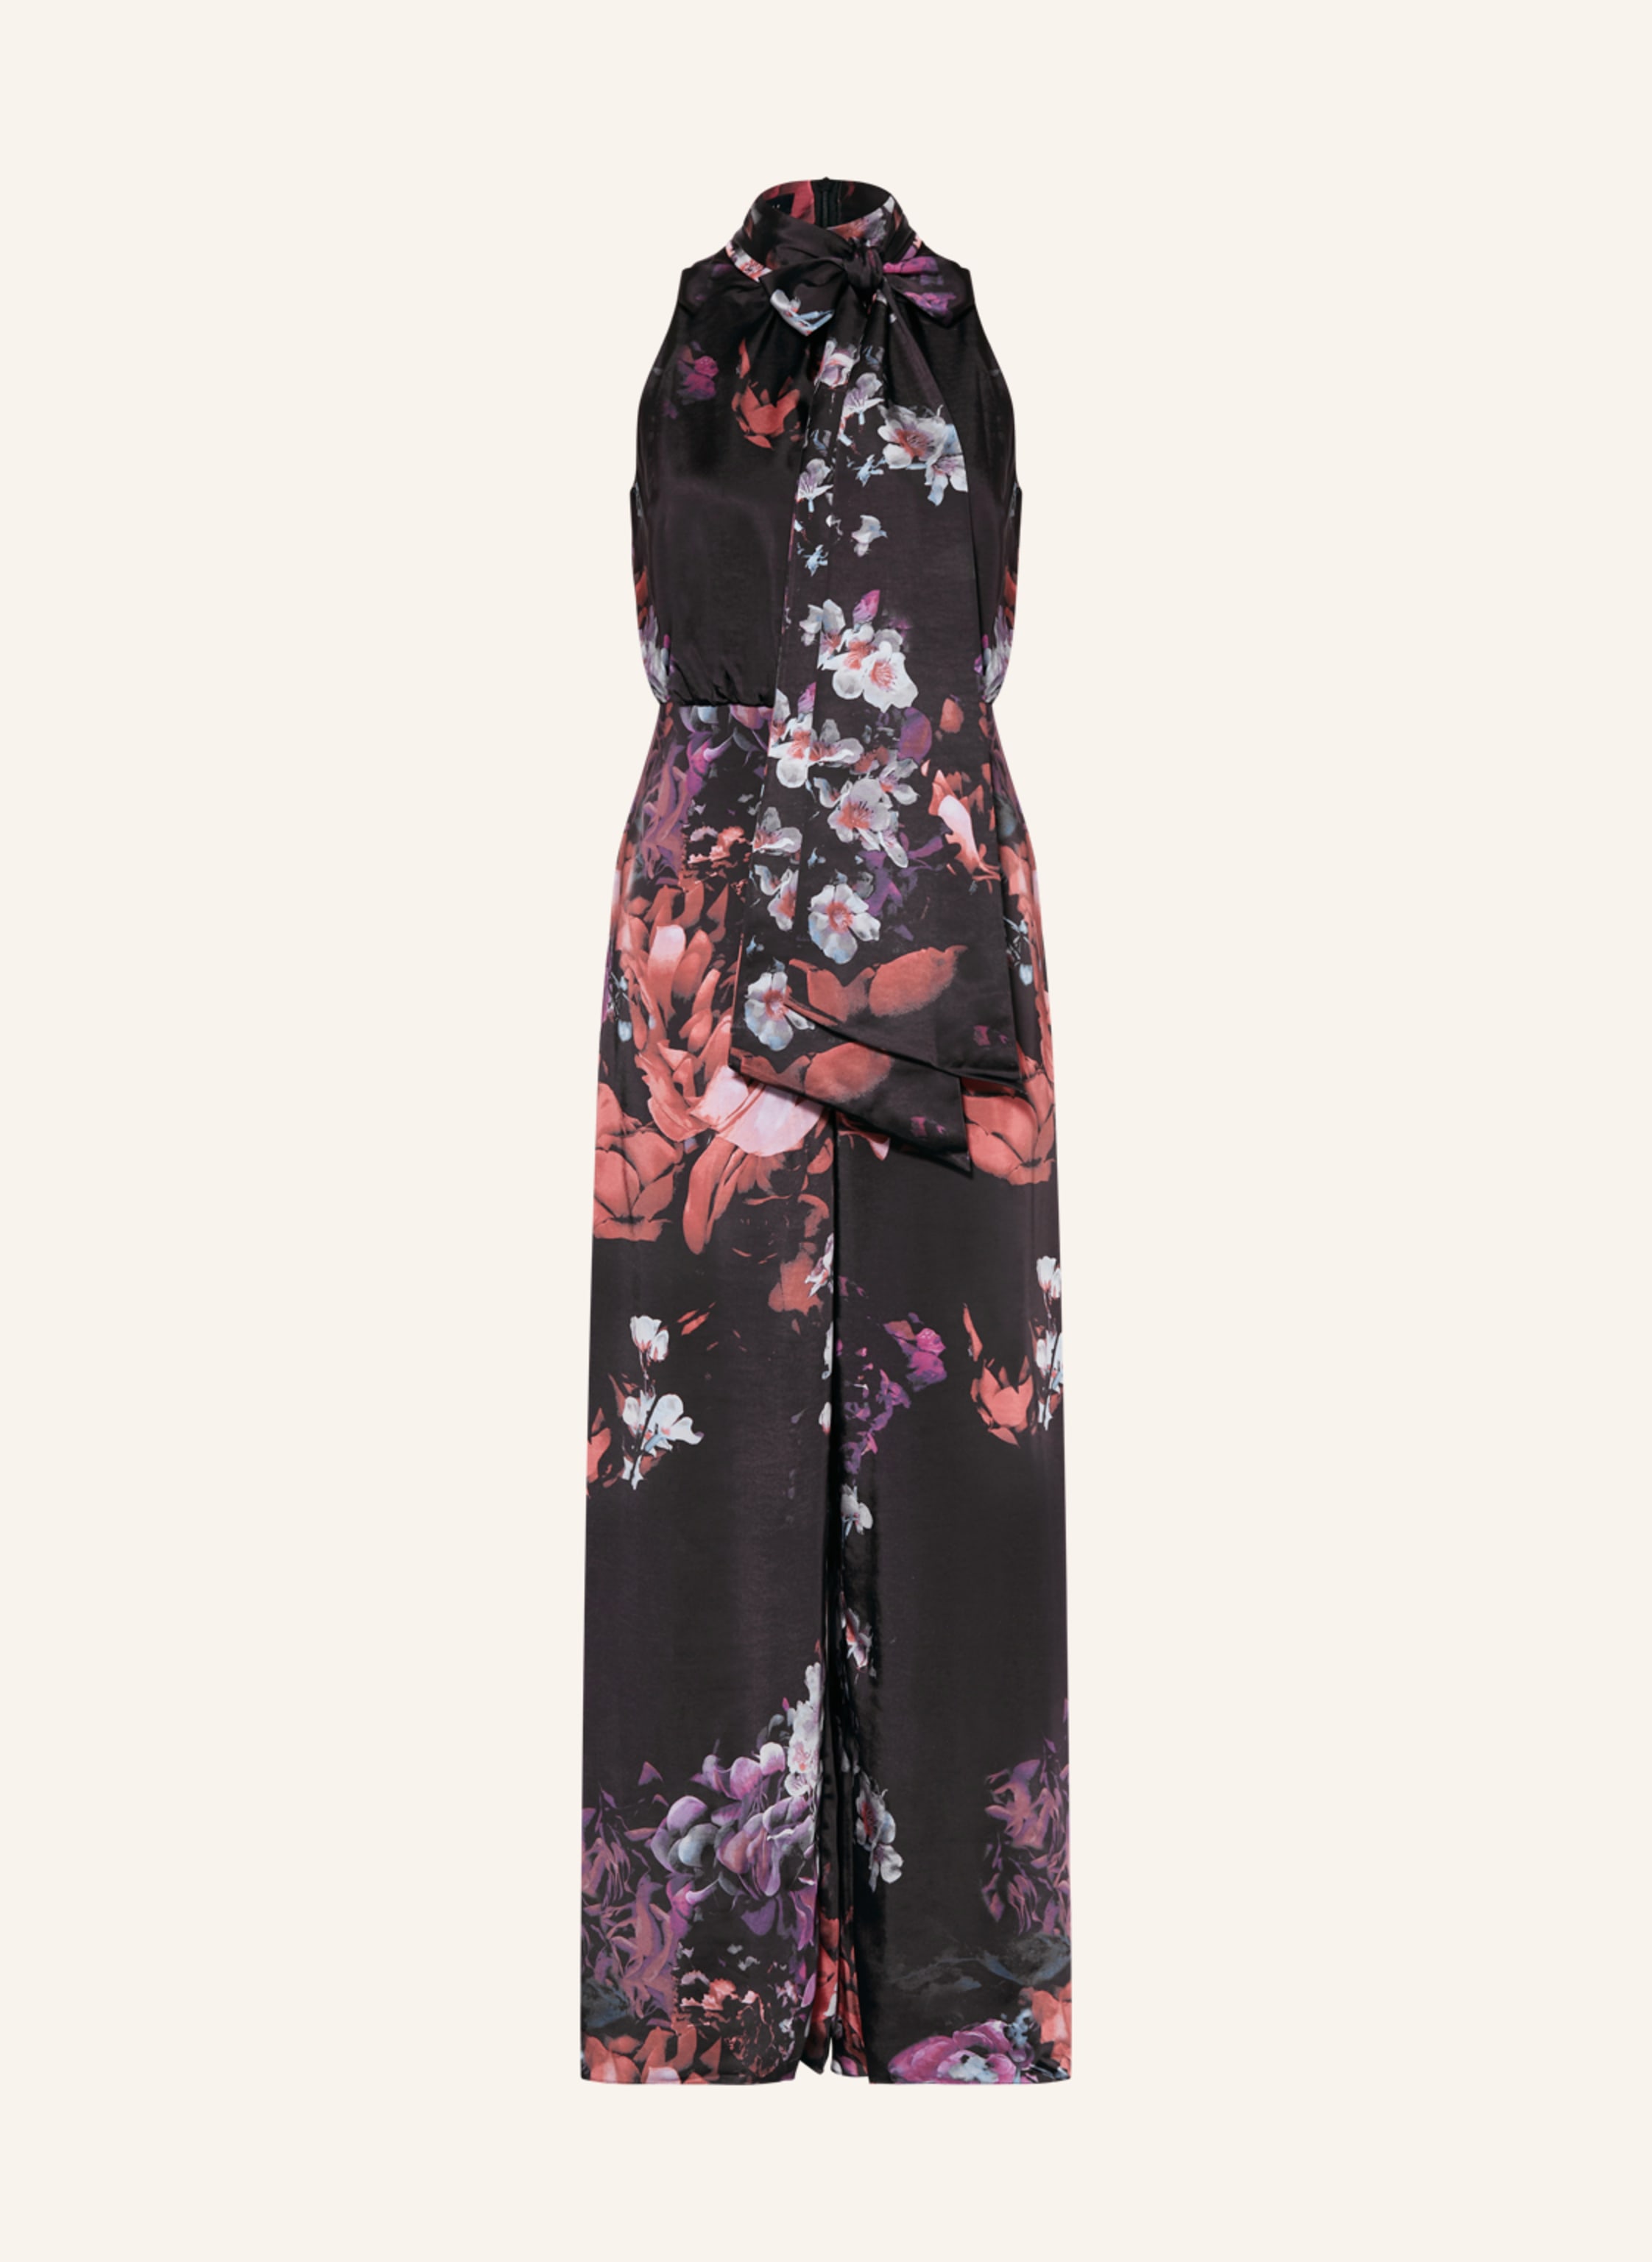 Carbon 38 tie waist leggings pink/mauve size medium - $58 - From Tiffany